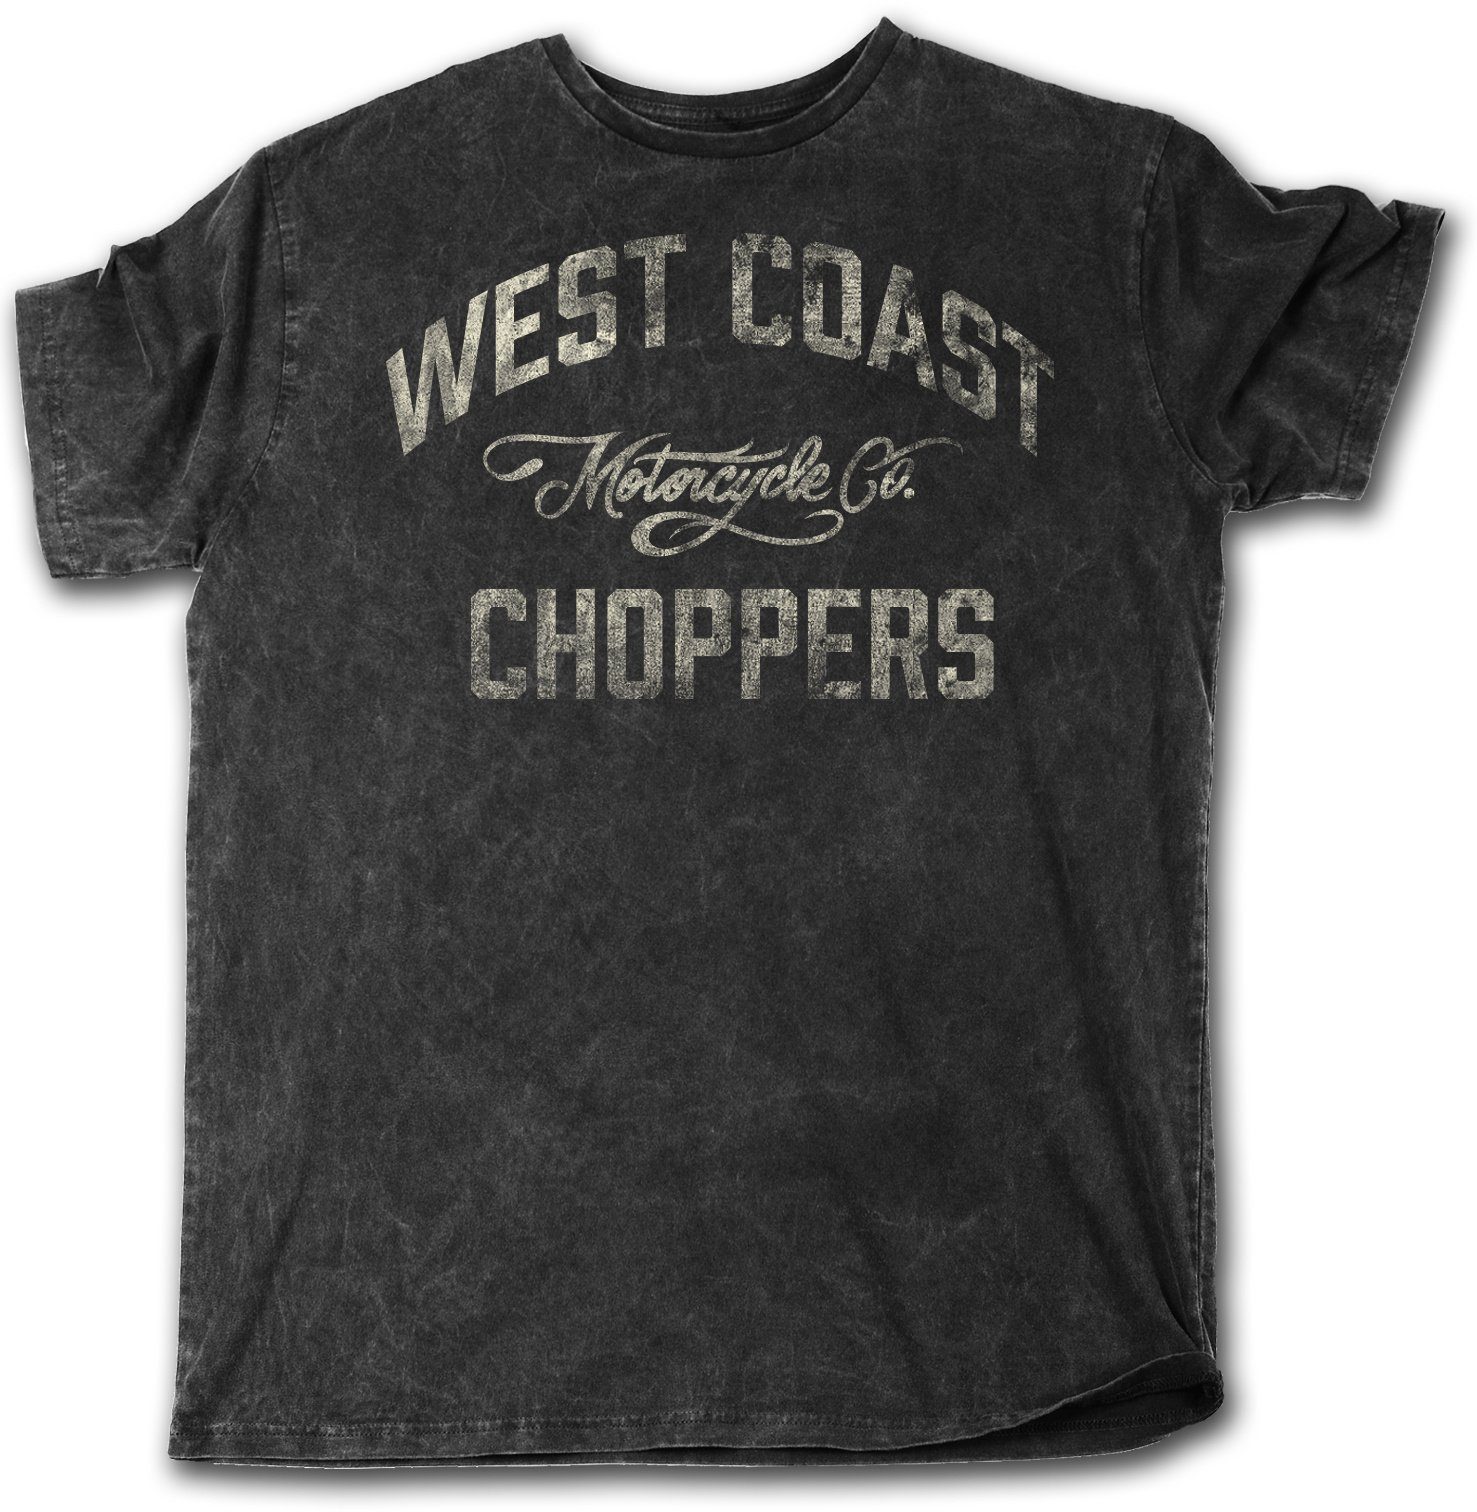 West Coast Choppers T-Shirt Choppers black Adult Motorcycle Herren Company Coast West T-Shirt new